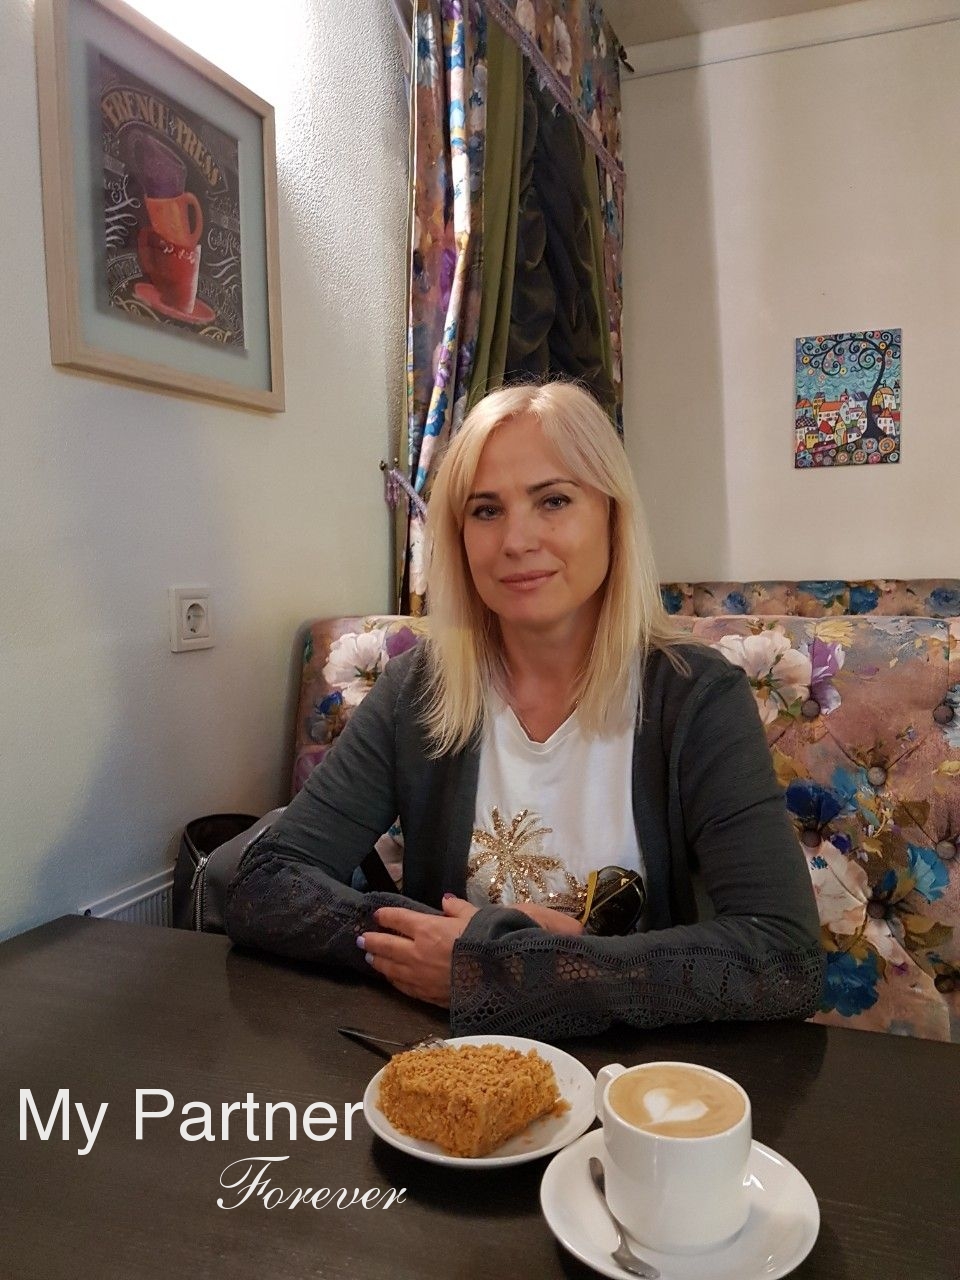 Dating Service to Meet Single Ukrainian Woman Lyudmila from Poltava, Ukraine